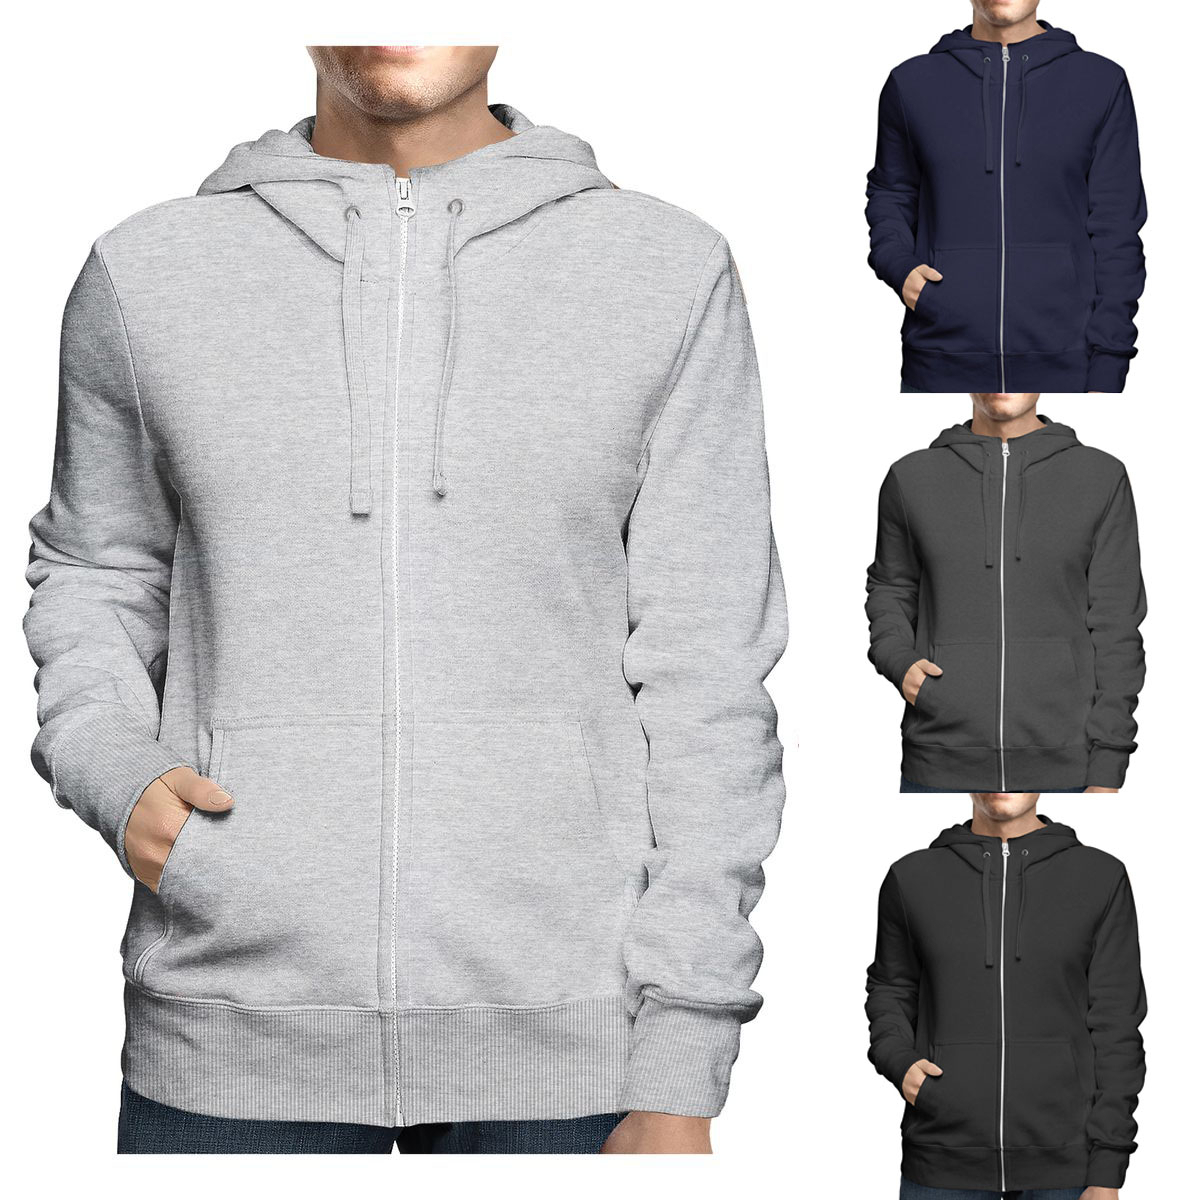 Multi-Pack: Men's Premium Soft Cozy Full Zip-Up Fleece Lined Hoodie Sweatshirt - 2-pack, Xx-large